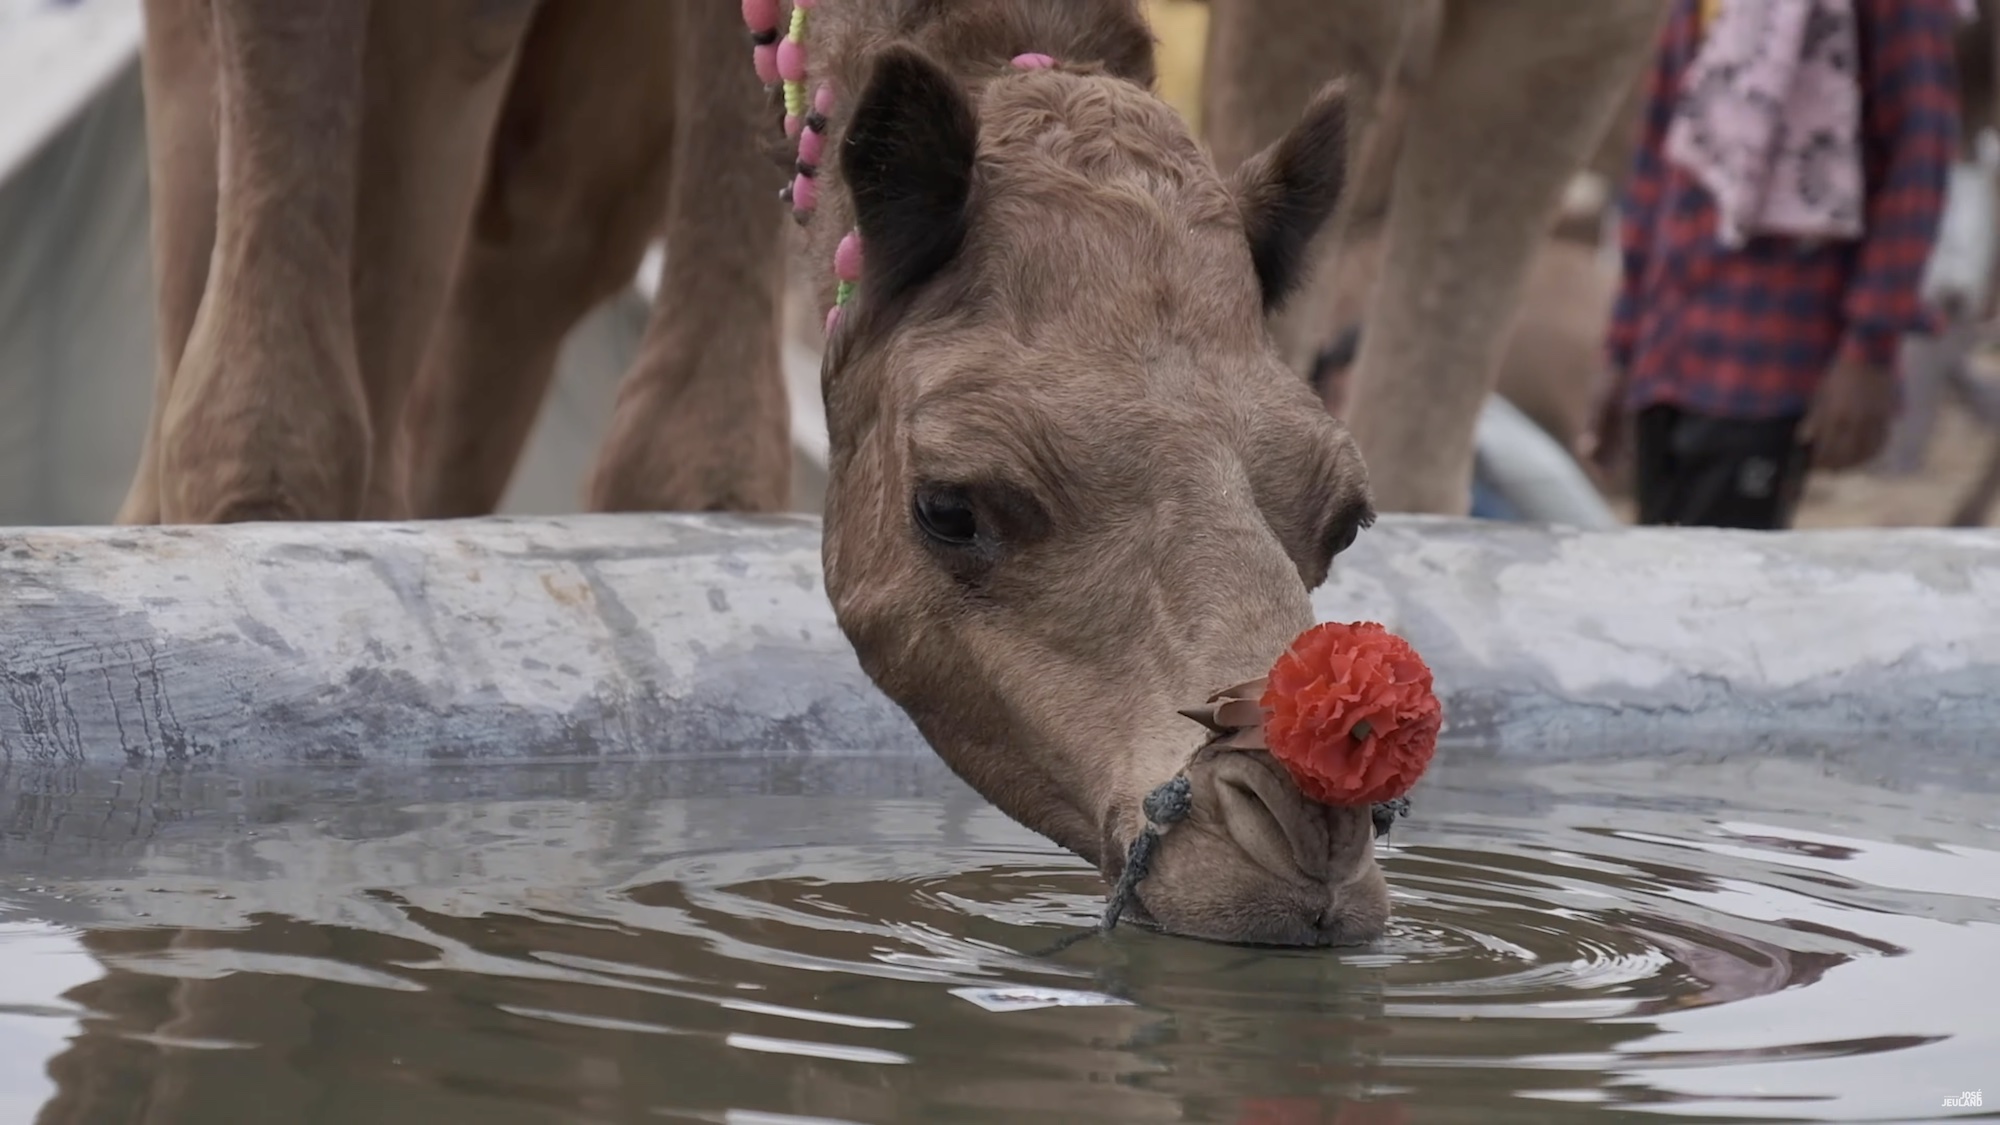 Pushkar camel documentary video thumbnail